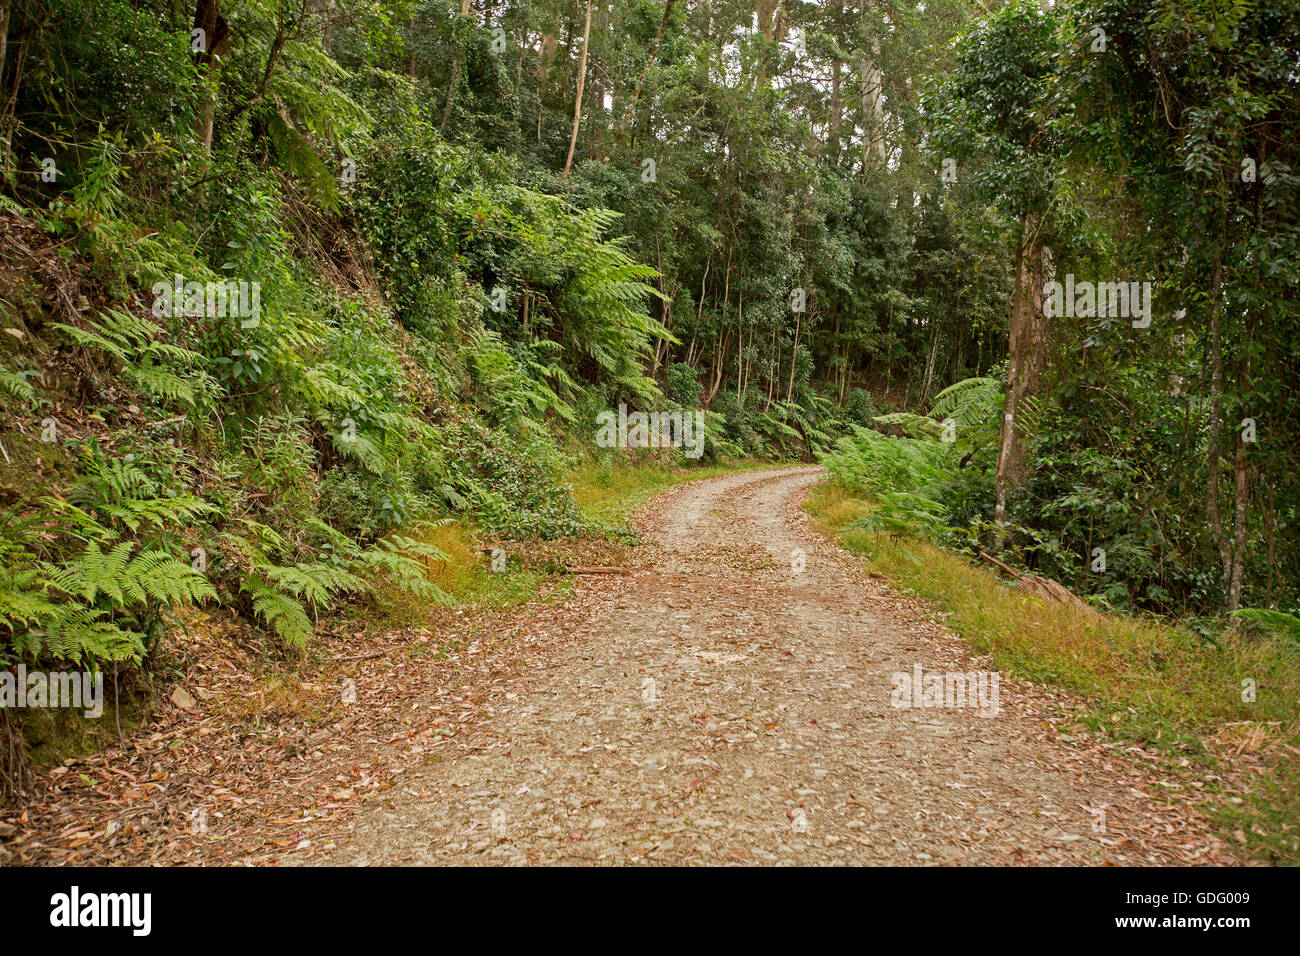 Narrow winding road slicing through dense lush green rainforest with ferns& tall trees in Australian Great Dividing Range Stock Photo